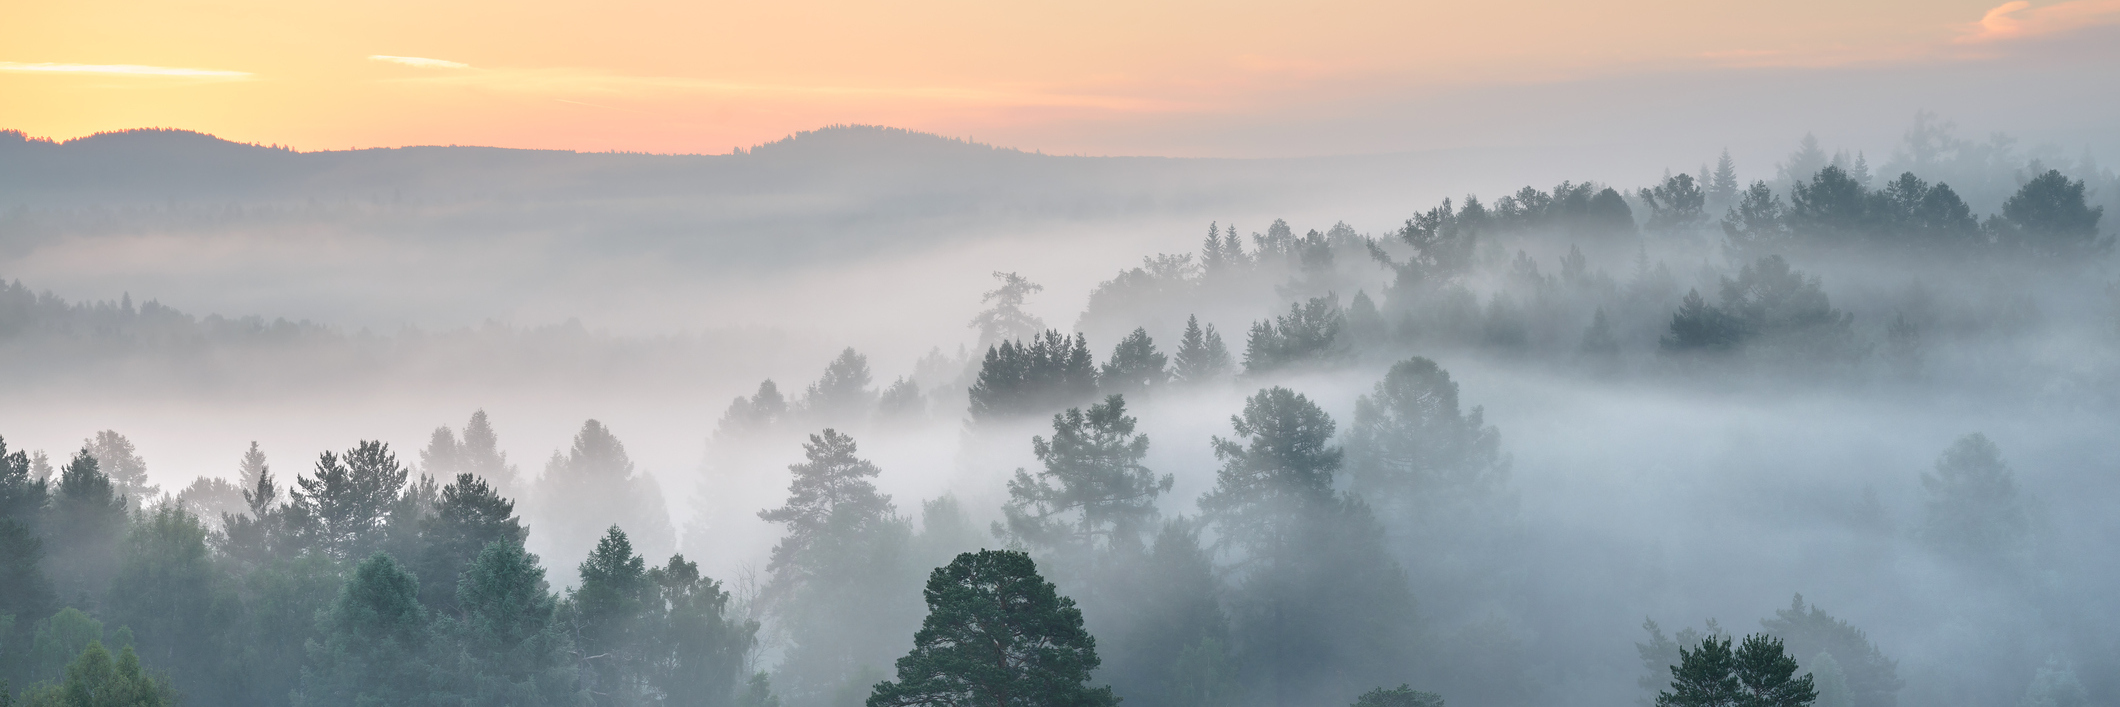 morning fog in forest at sunrise